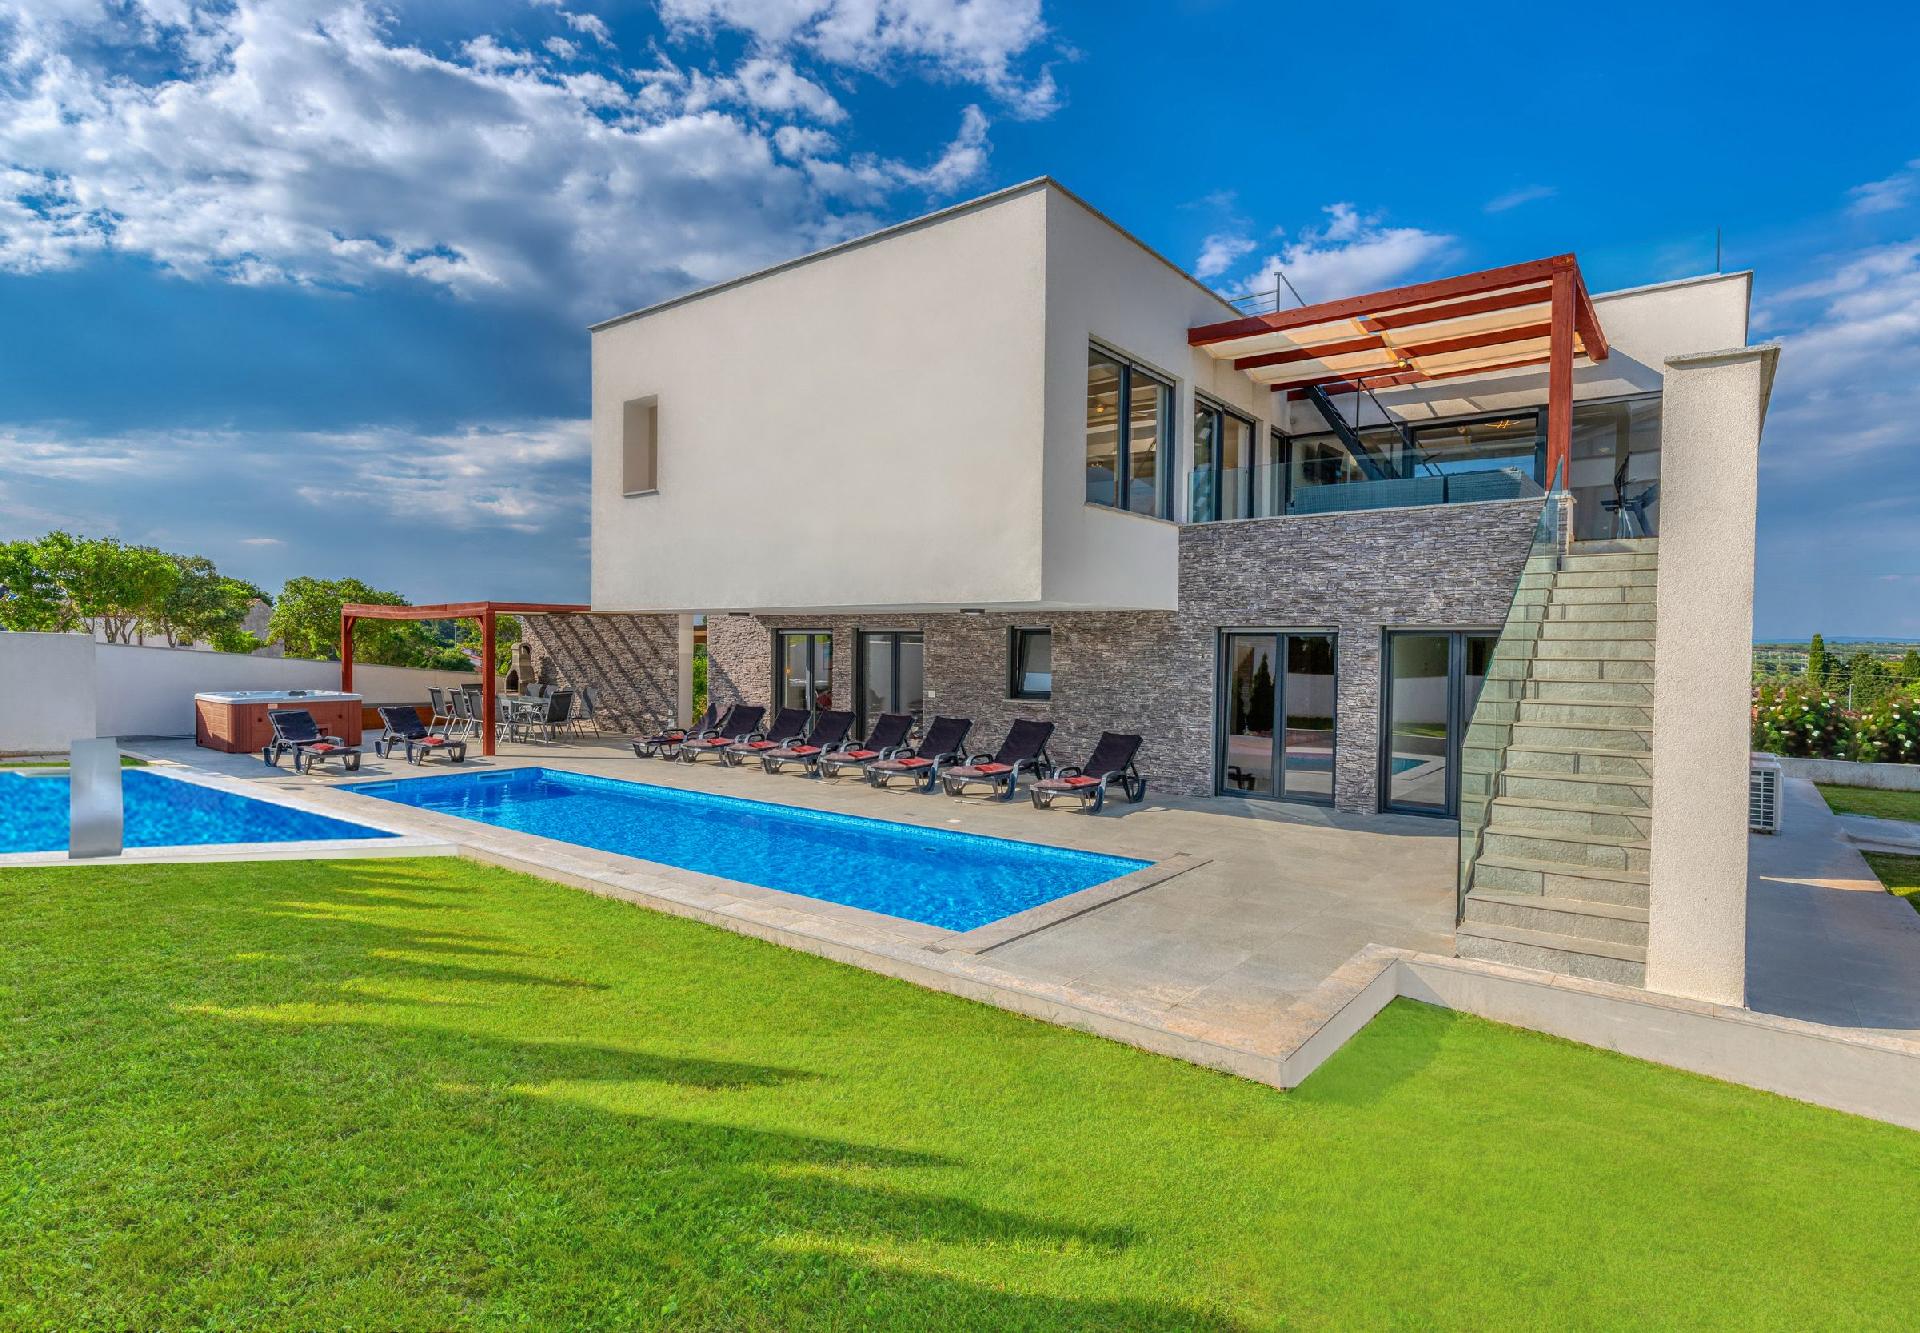 Leons Holiday Homes Villa 3 am Meer mit 2 Pools Ferienhaus in Kroatien